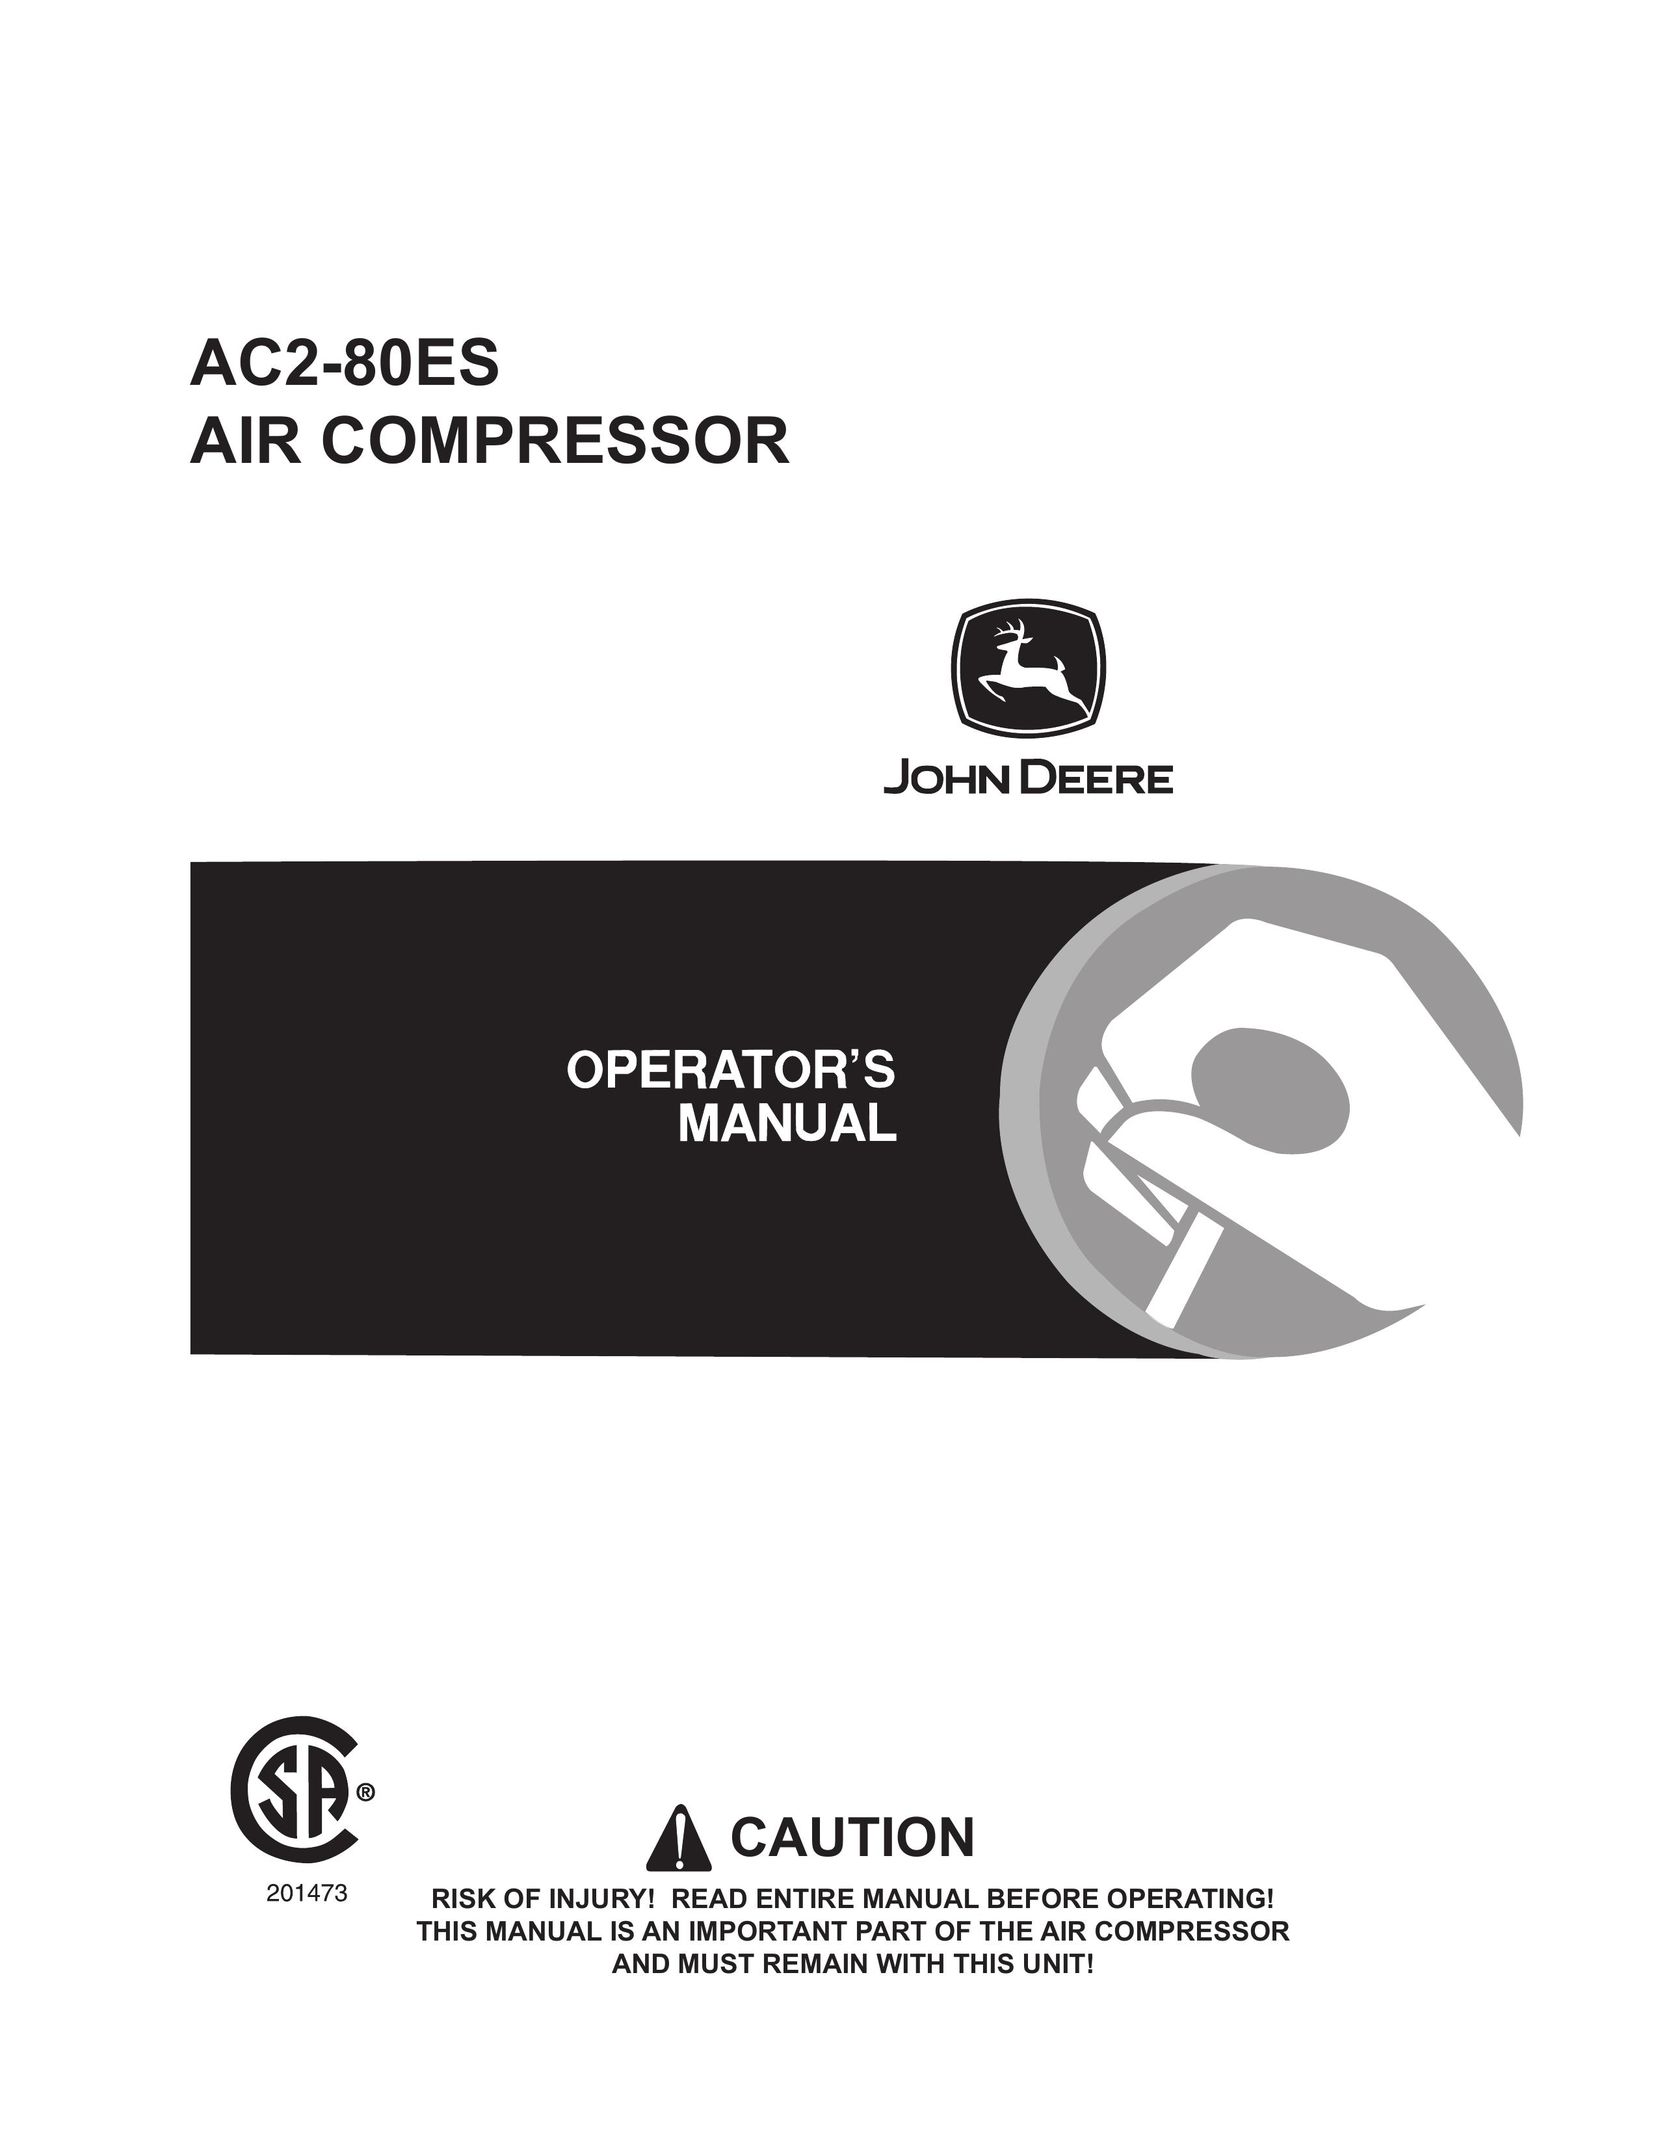 John Deere AC2-80ES Air Compressor User Manual